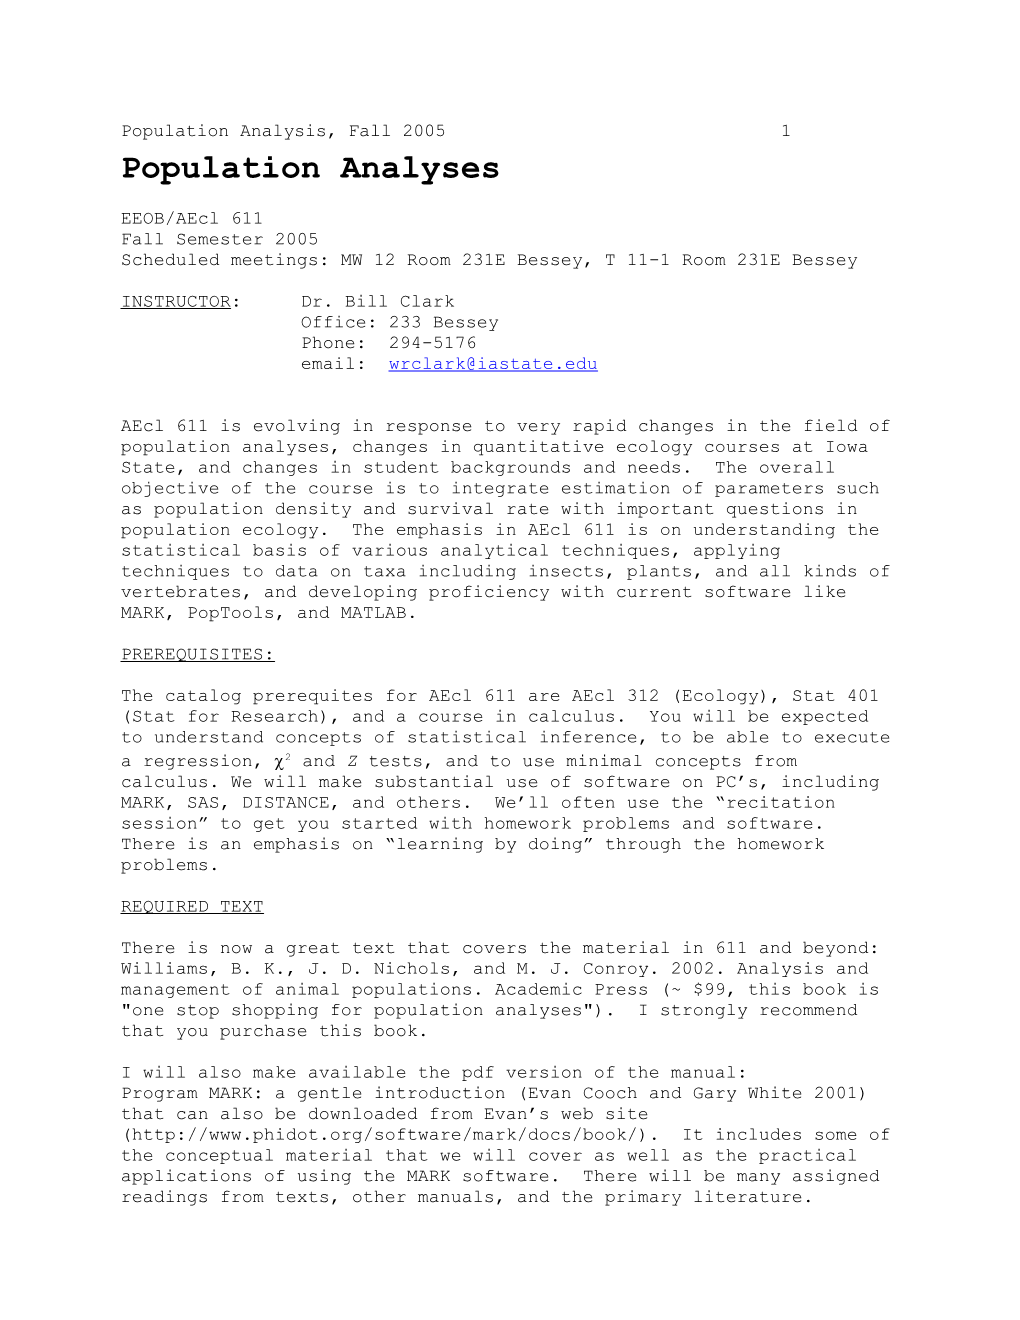 AECL 611, Population Analysis